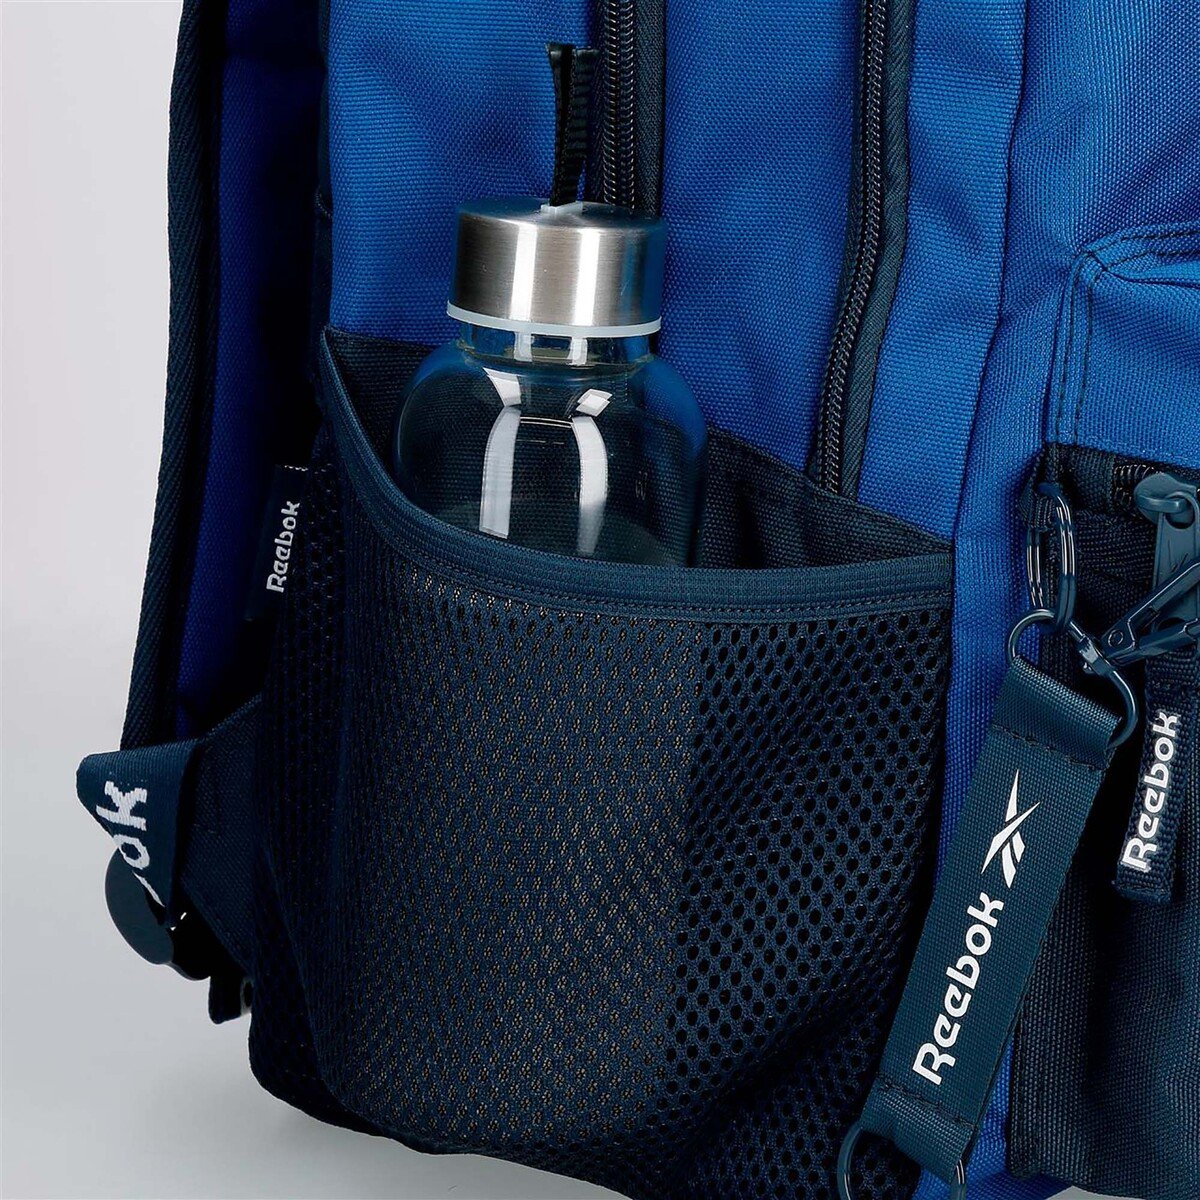 Reebok Backpack 44cm 8682521 Blue